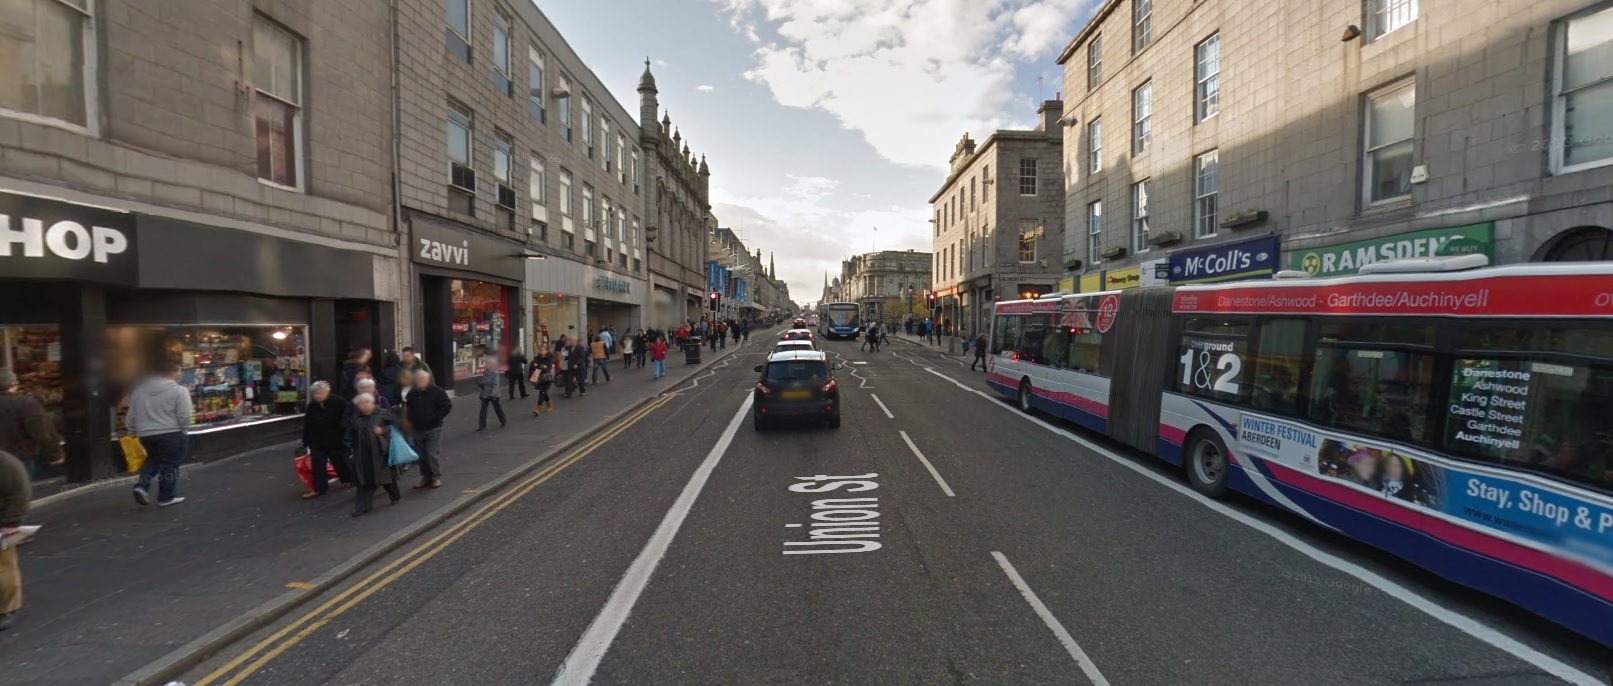 8. Union Street, Aberdeen (46 microgrammes nitrogen dioxide per cubic metre)